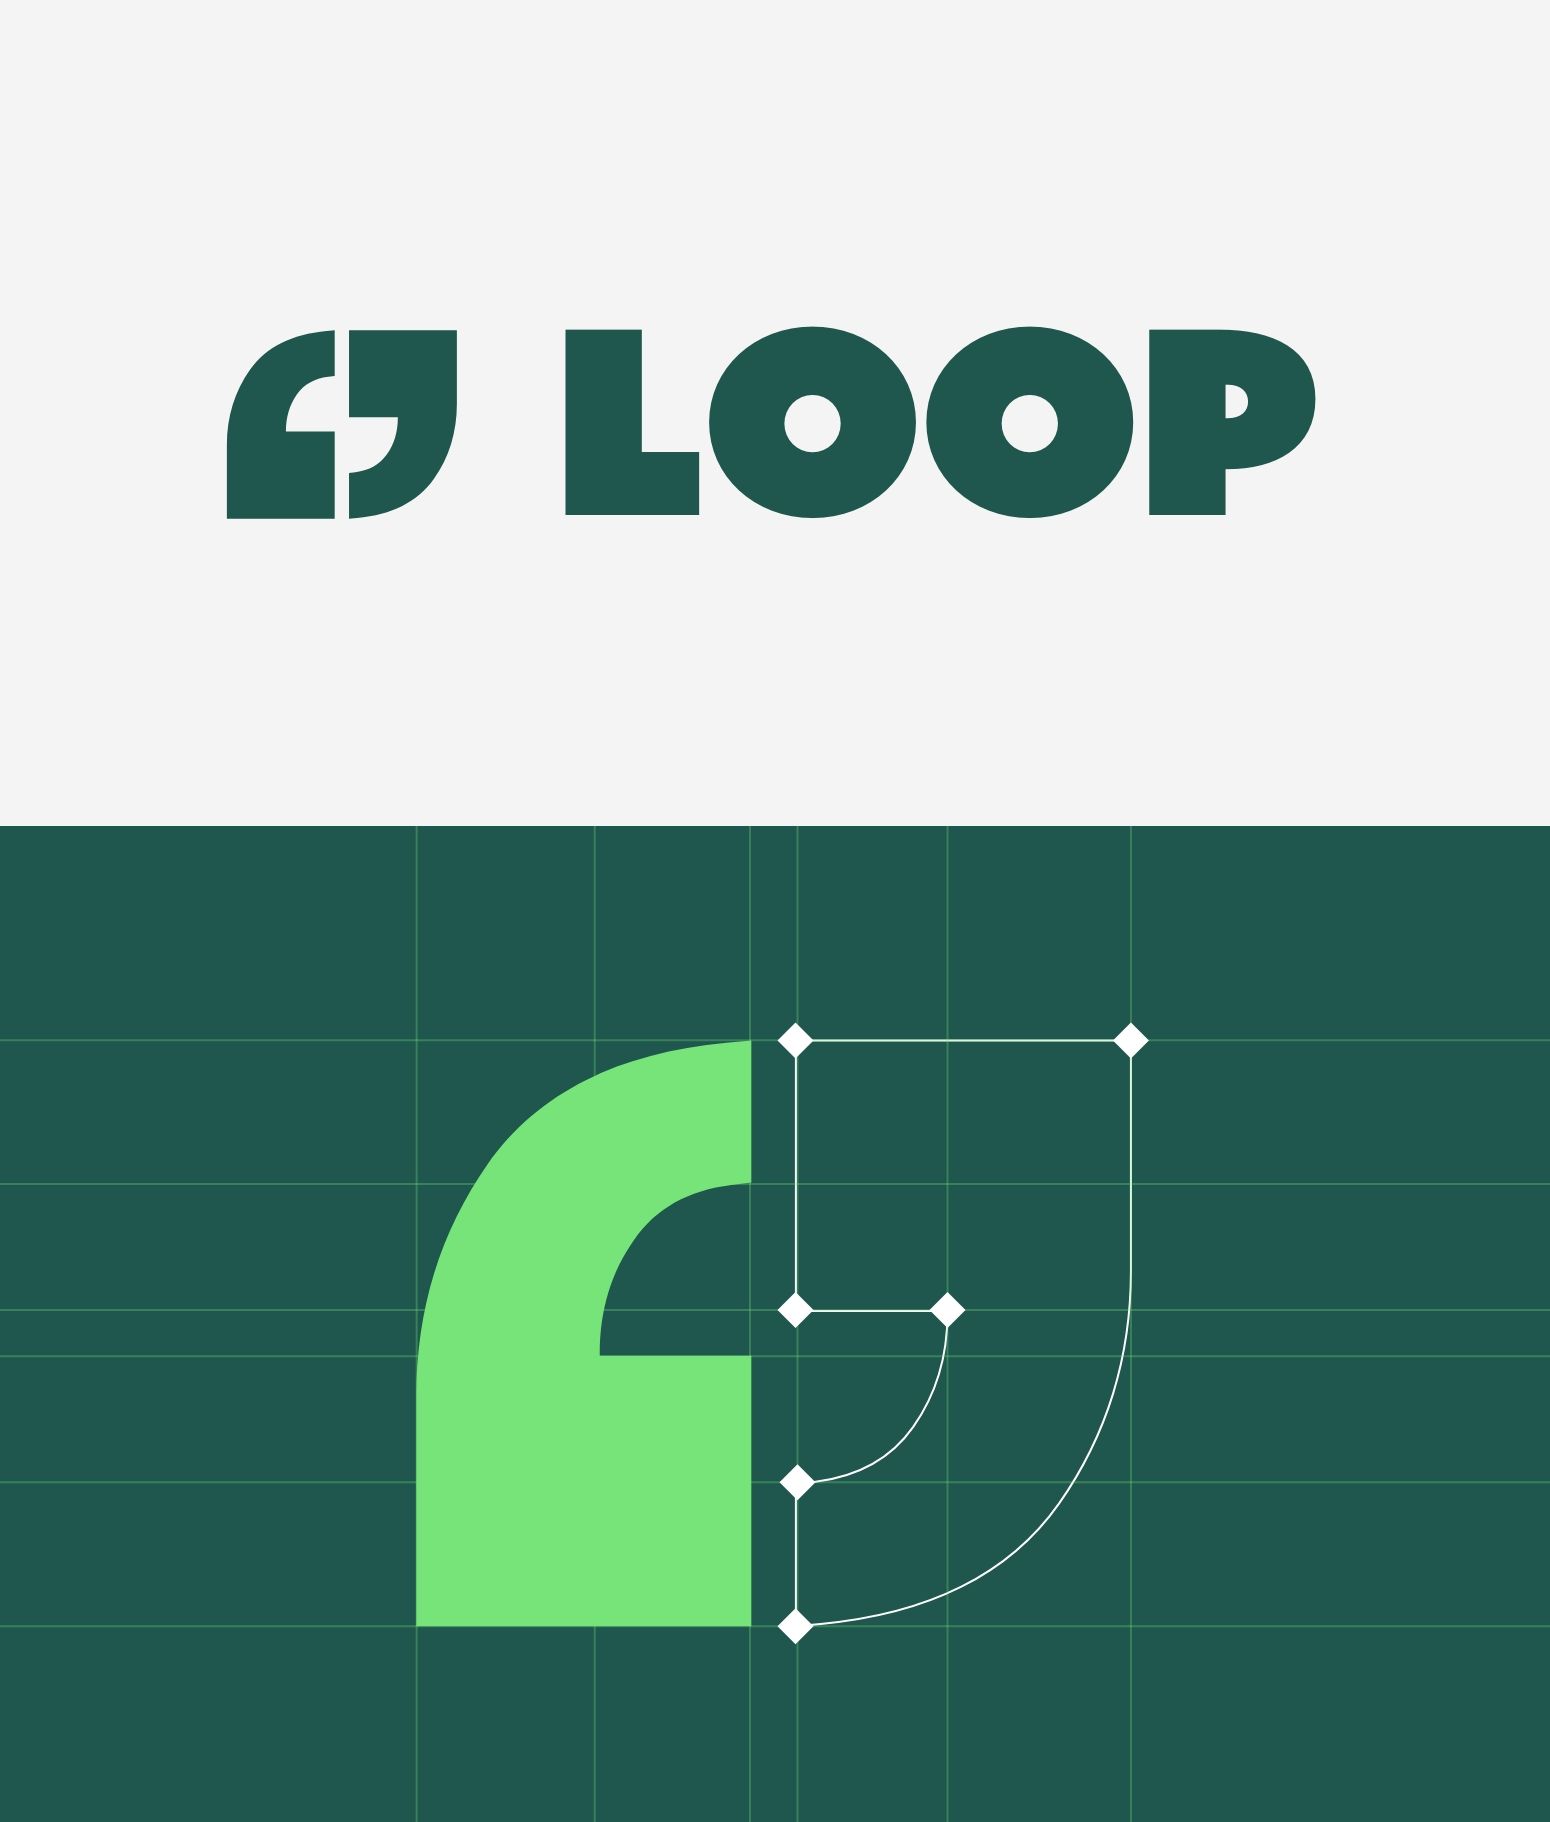 Design guidance on Loop logomark and icon.